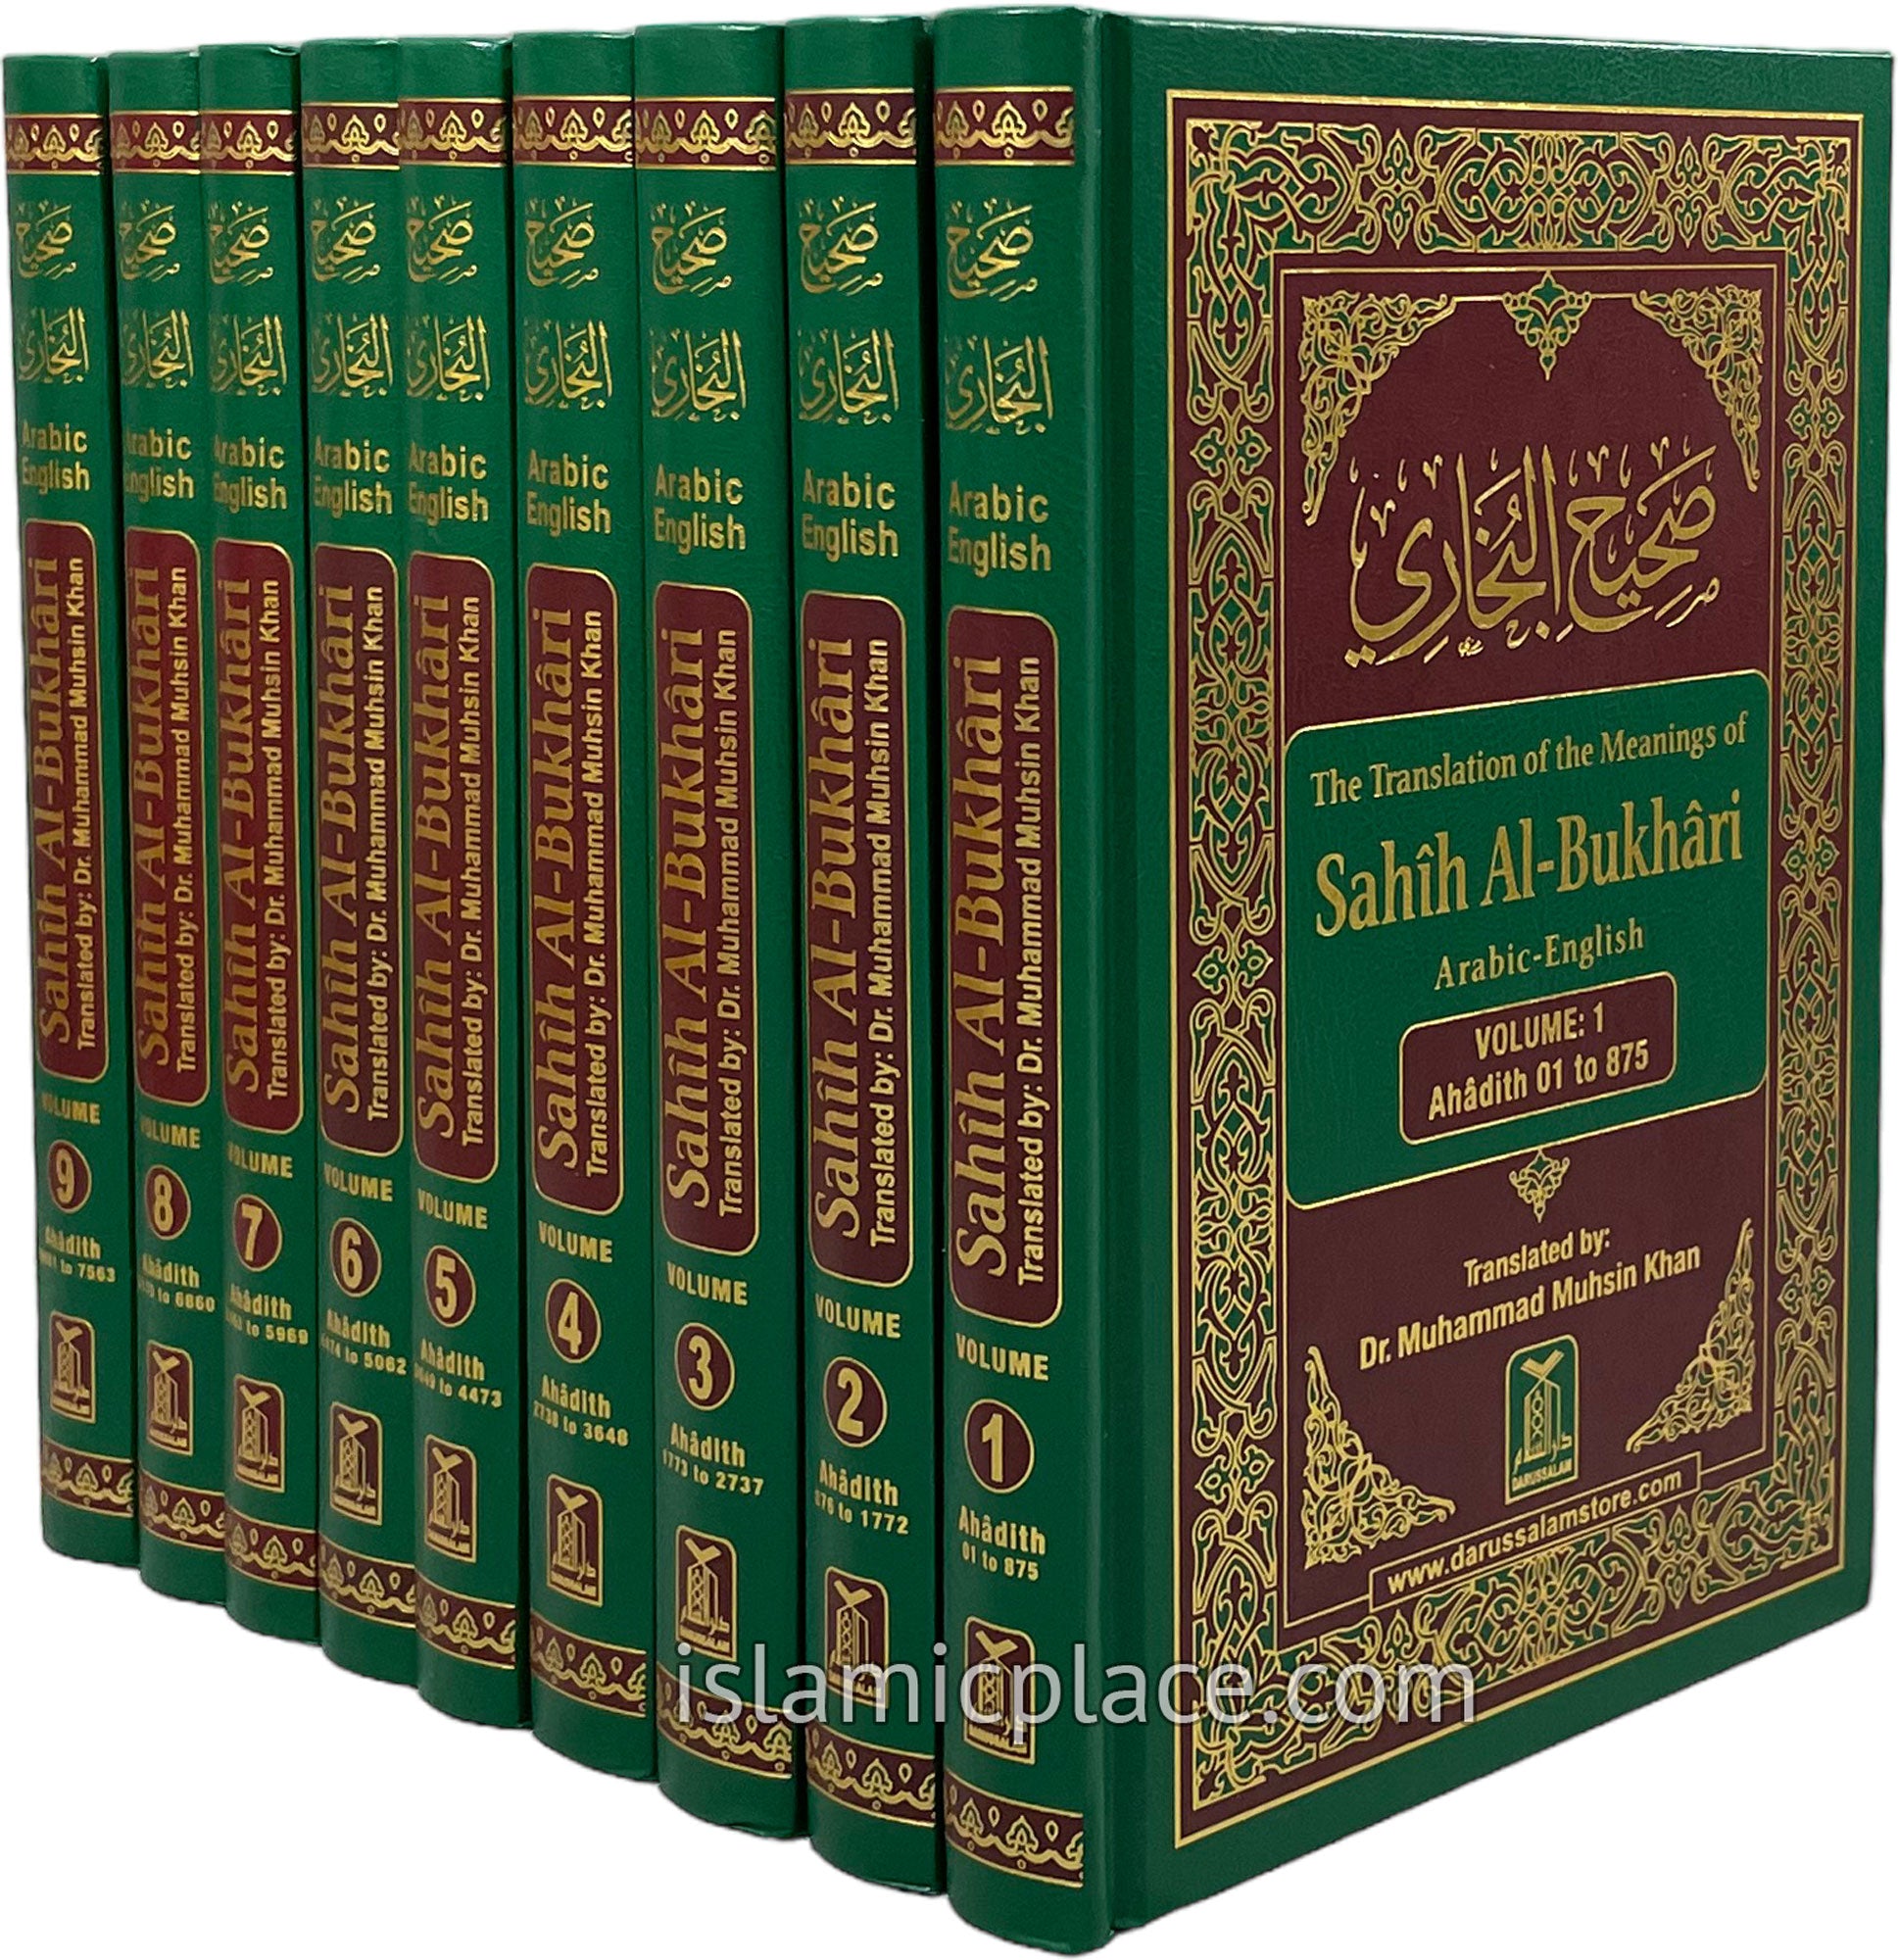 [9 vol set] Sahih Al-Bukhari (Arabic and English) Saudi print